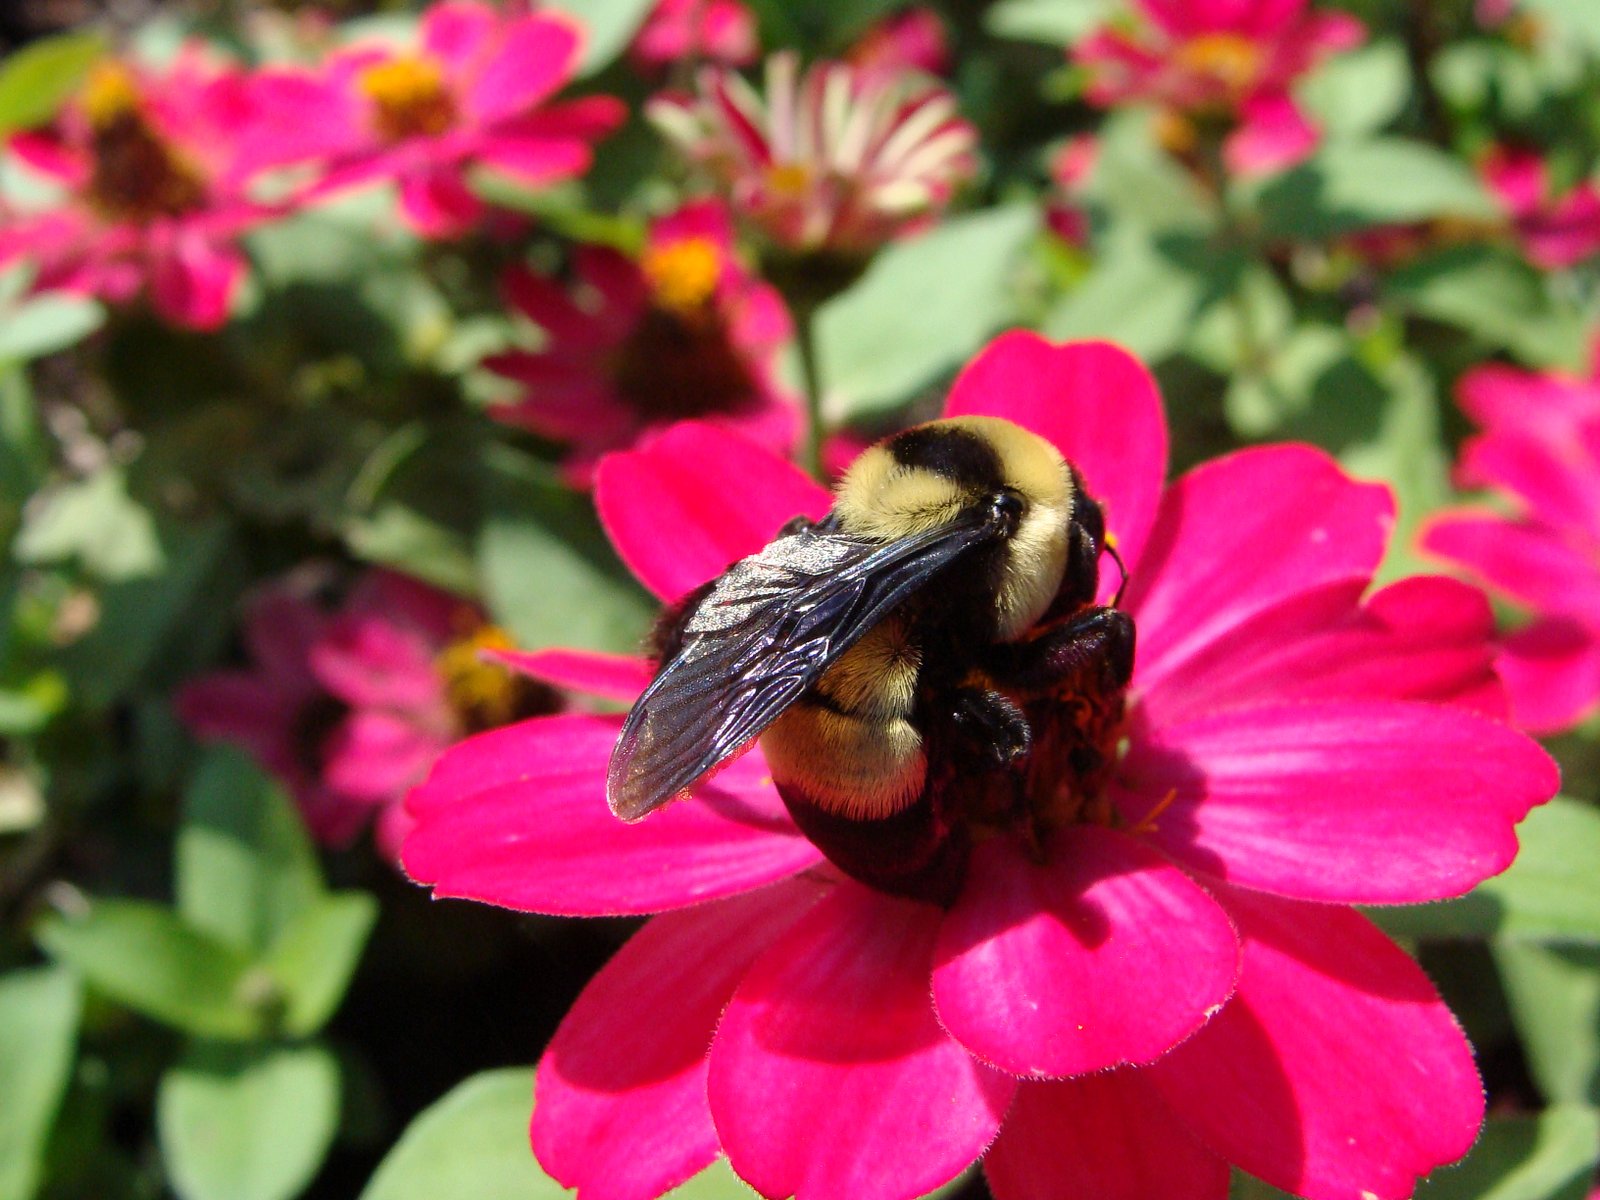 Southern plains bumble bee (Bombus fraternus) photo